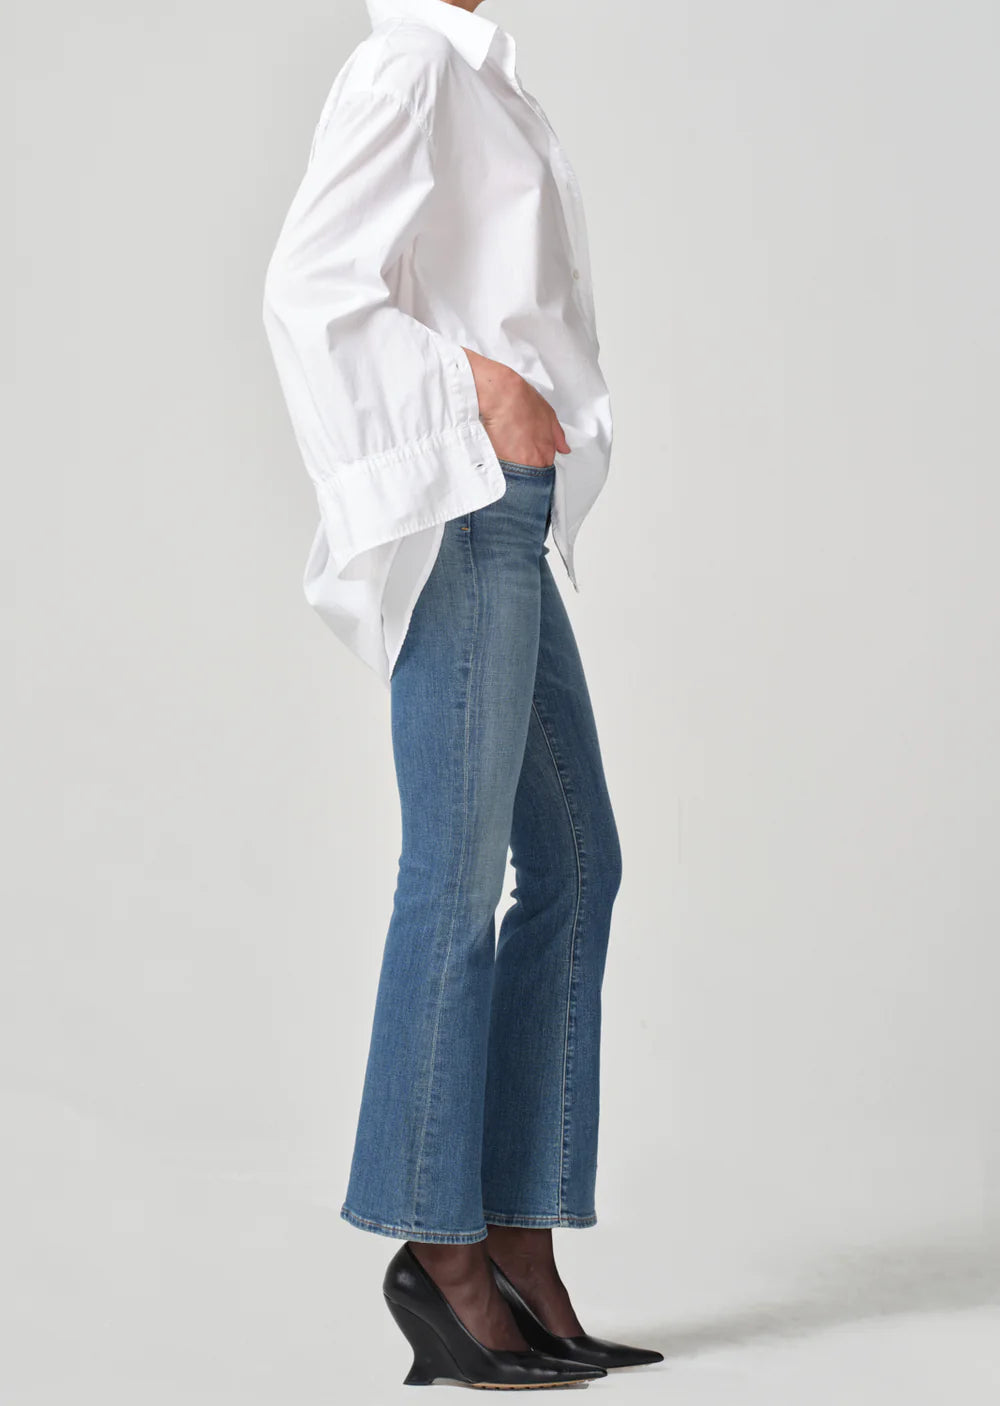 Jeans Emanuelle Low Rise Boot